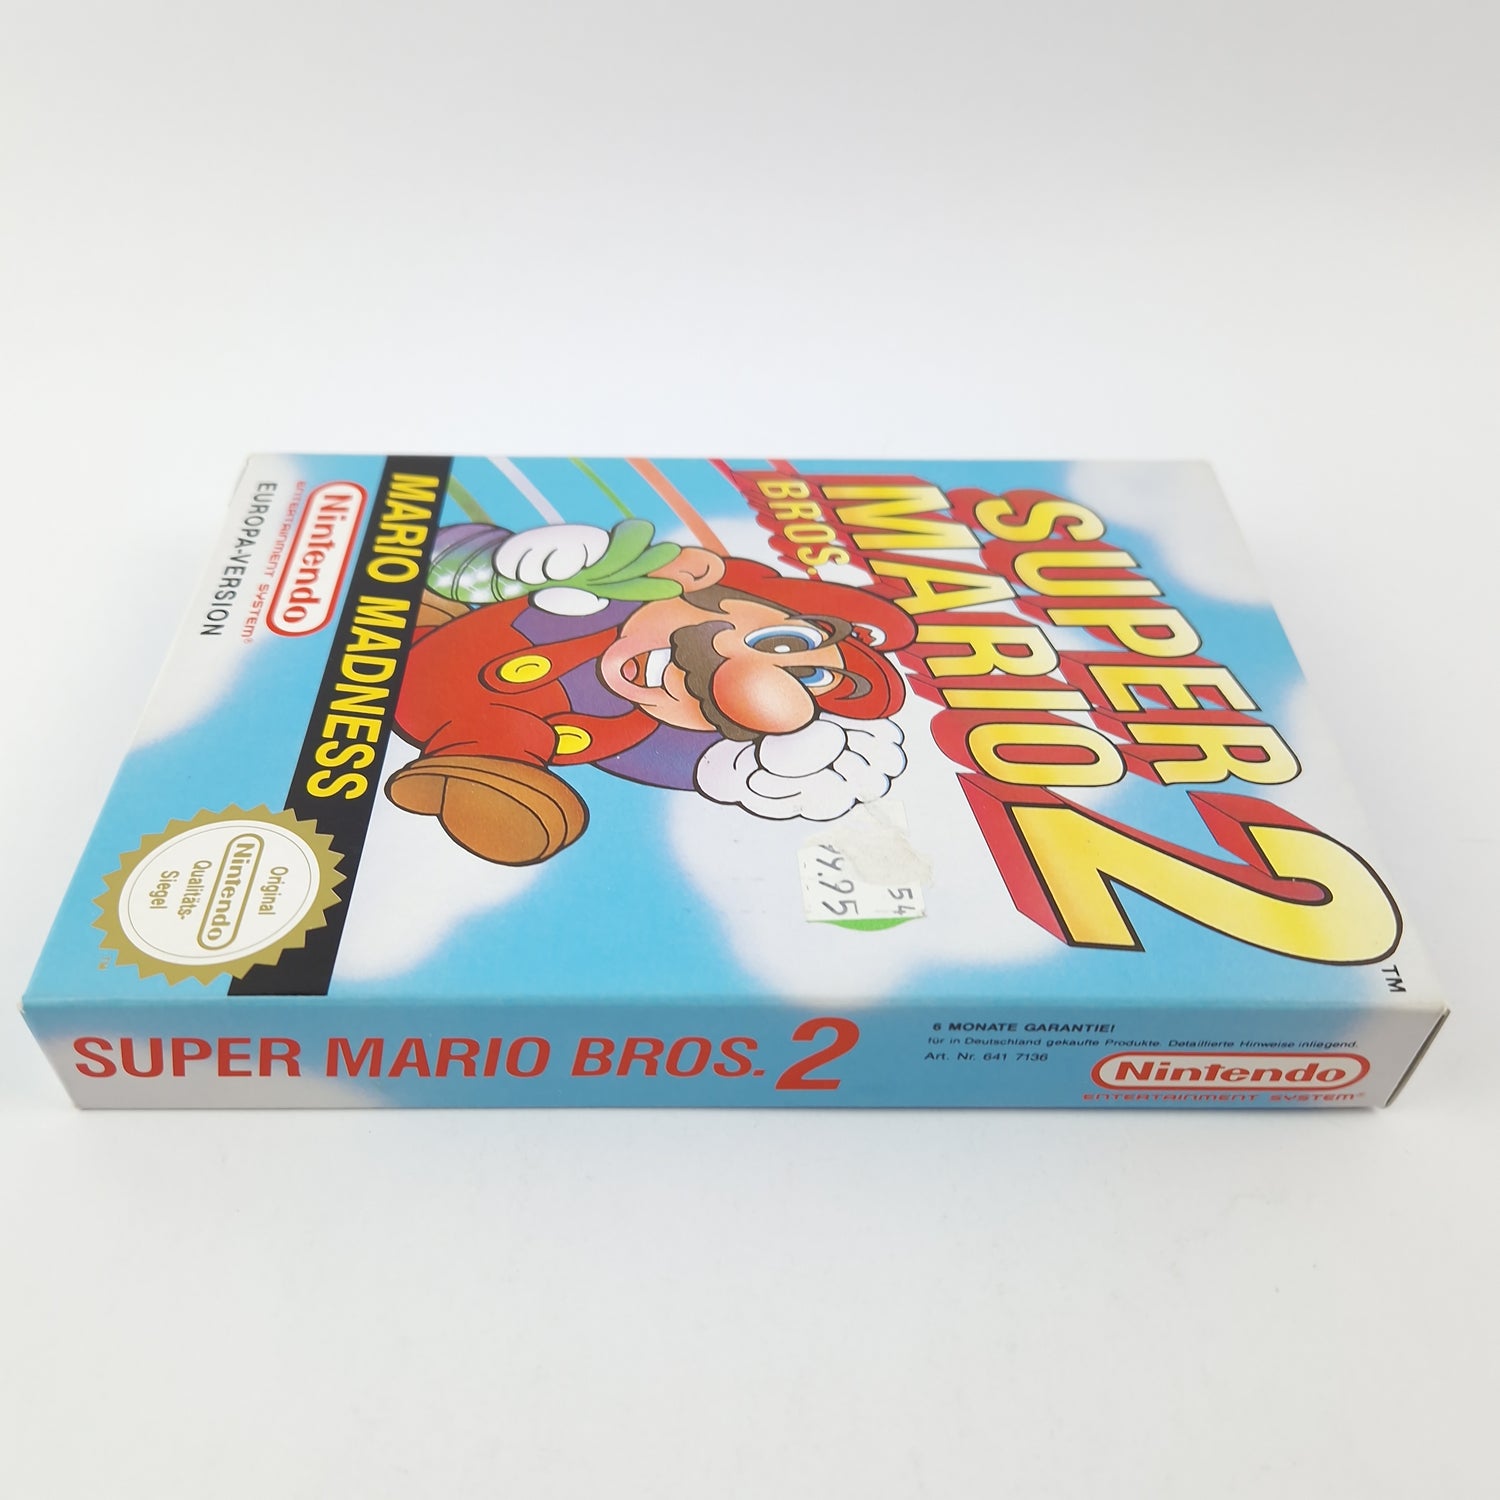 Nintendo NES Game: Super Mario Bros. 2 - Module Cartridge Instructions OVP cib PAL